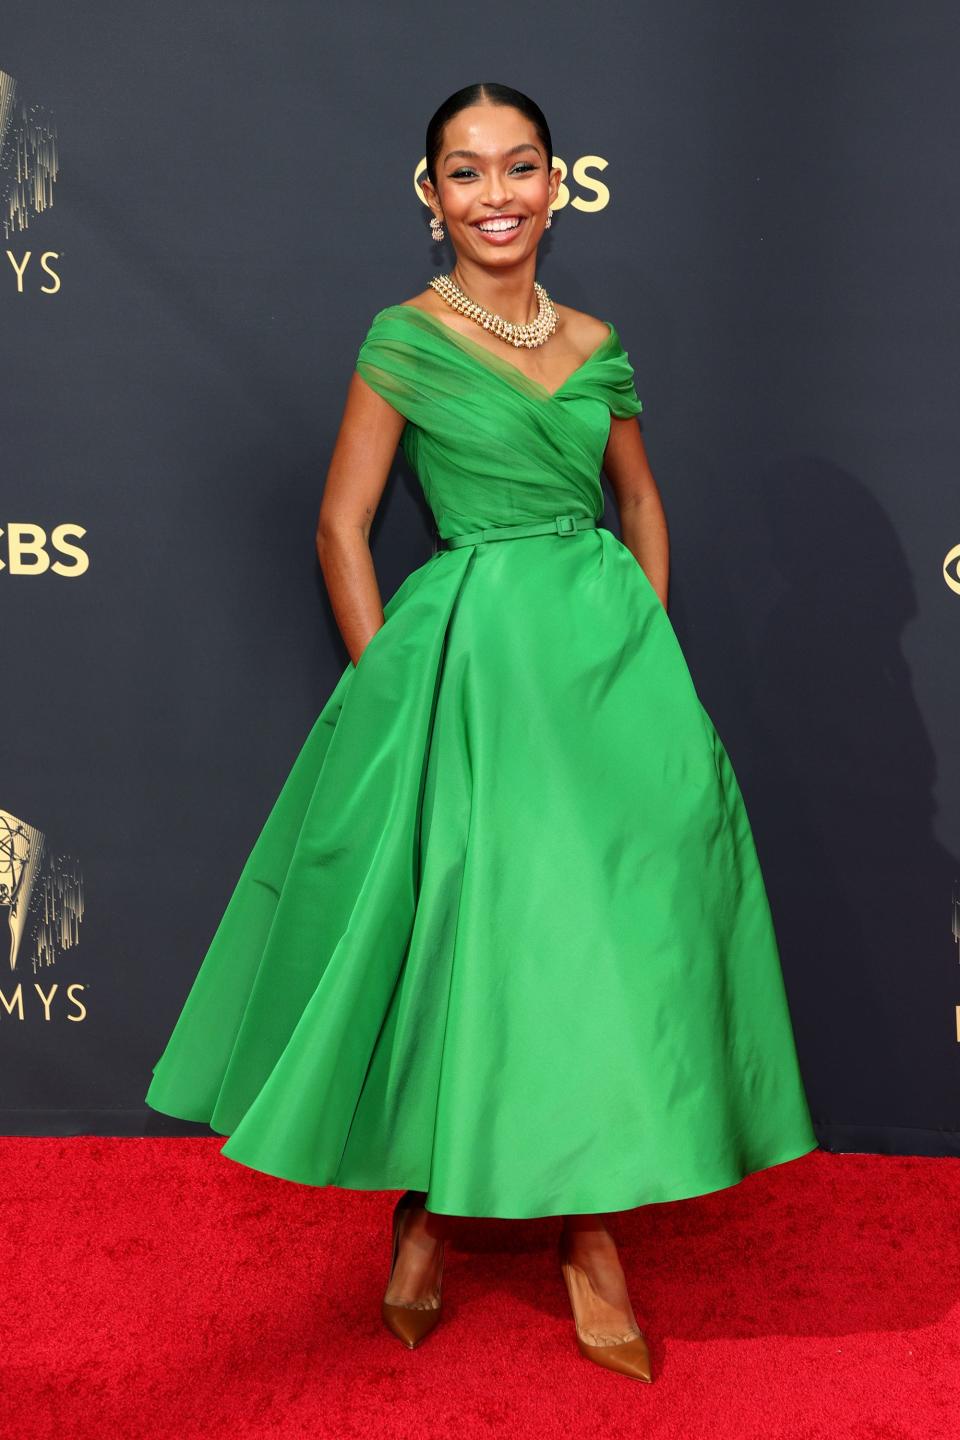 Yara Shahidi wears a green dress at the Emmys.